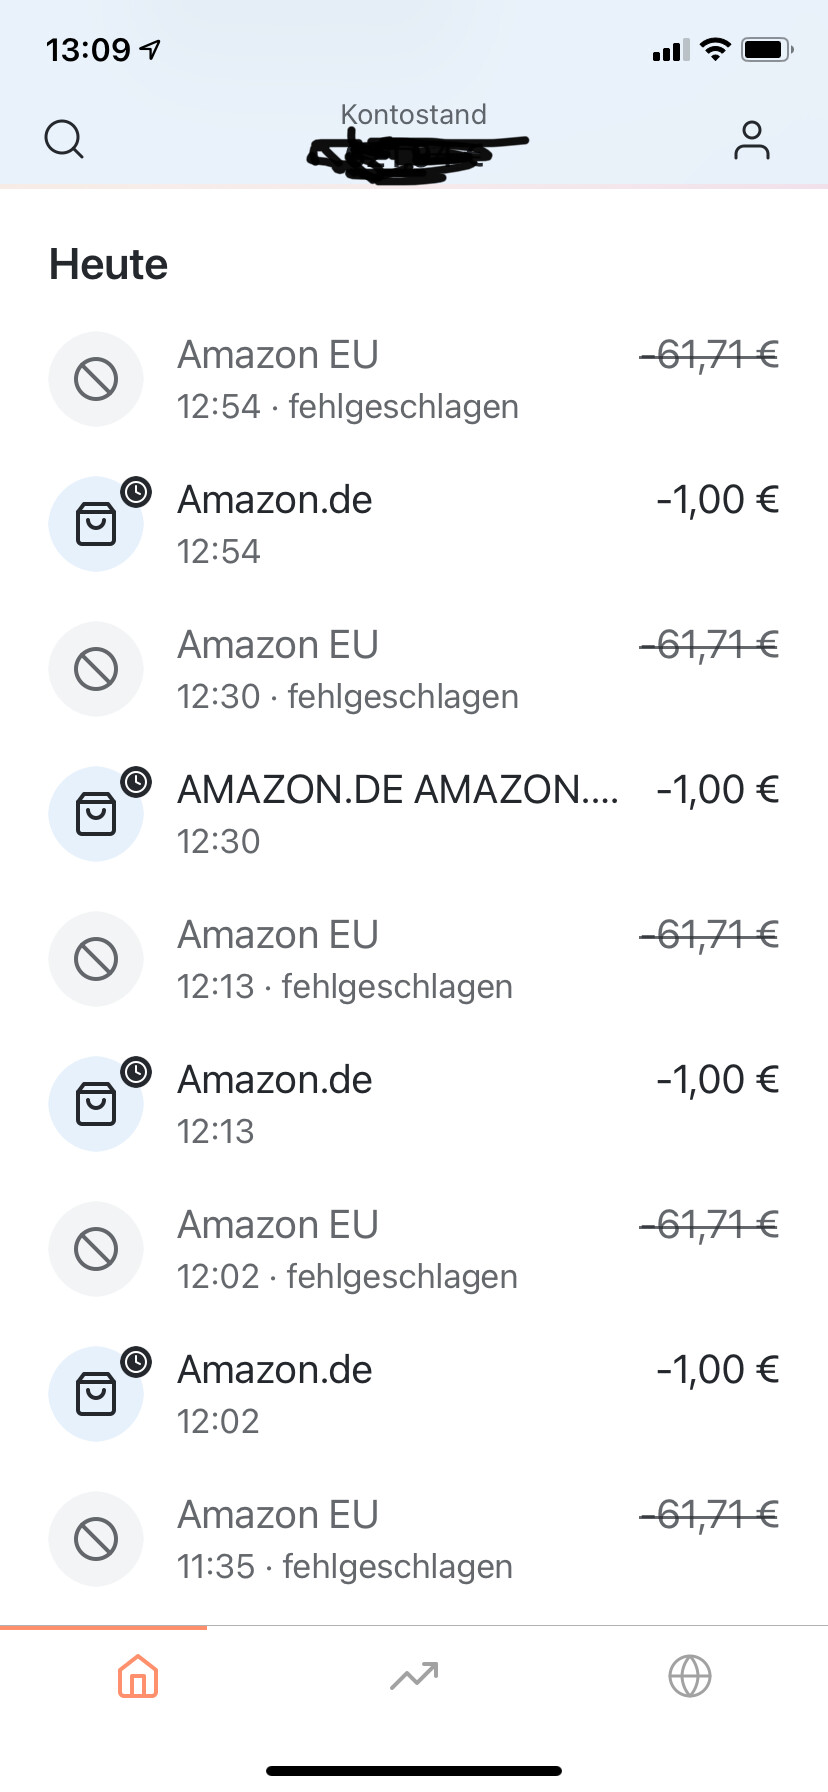 Amazon de help chat